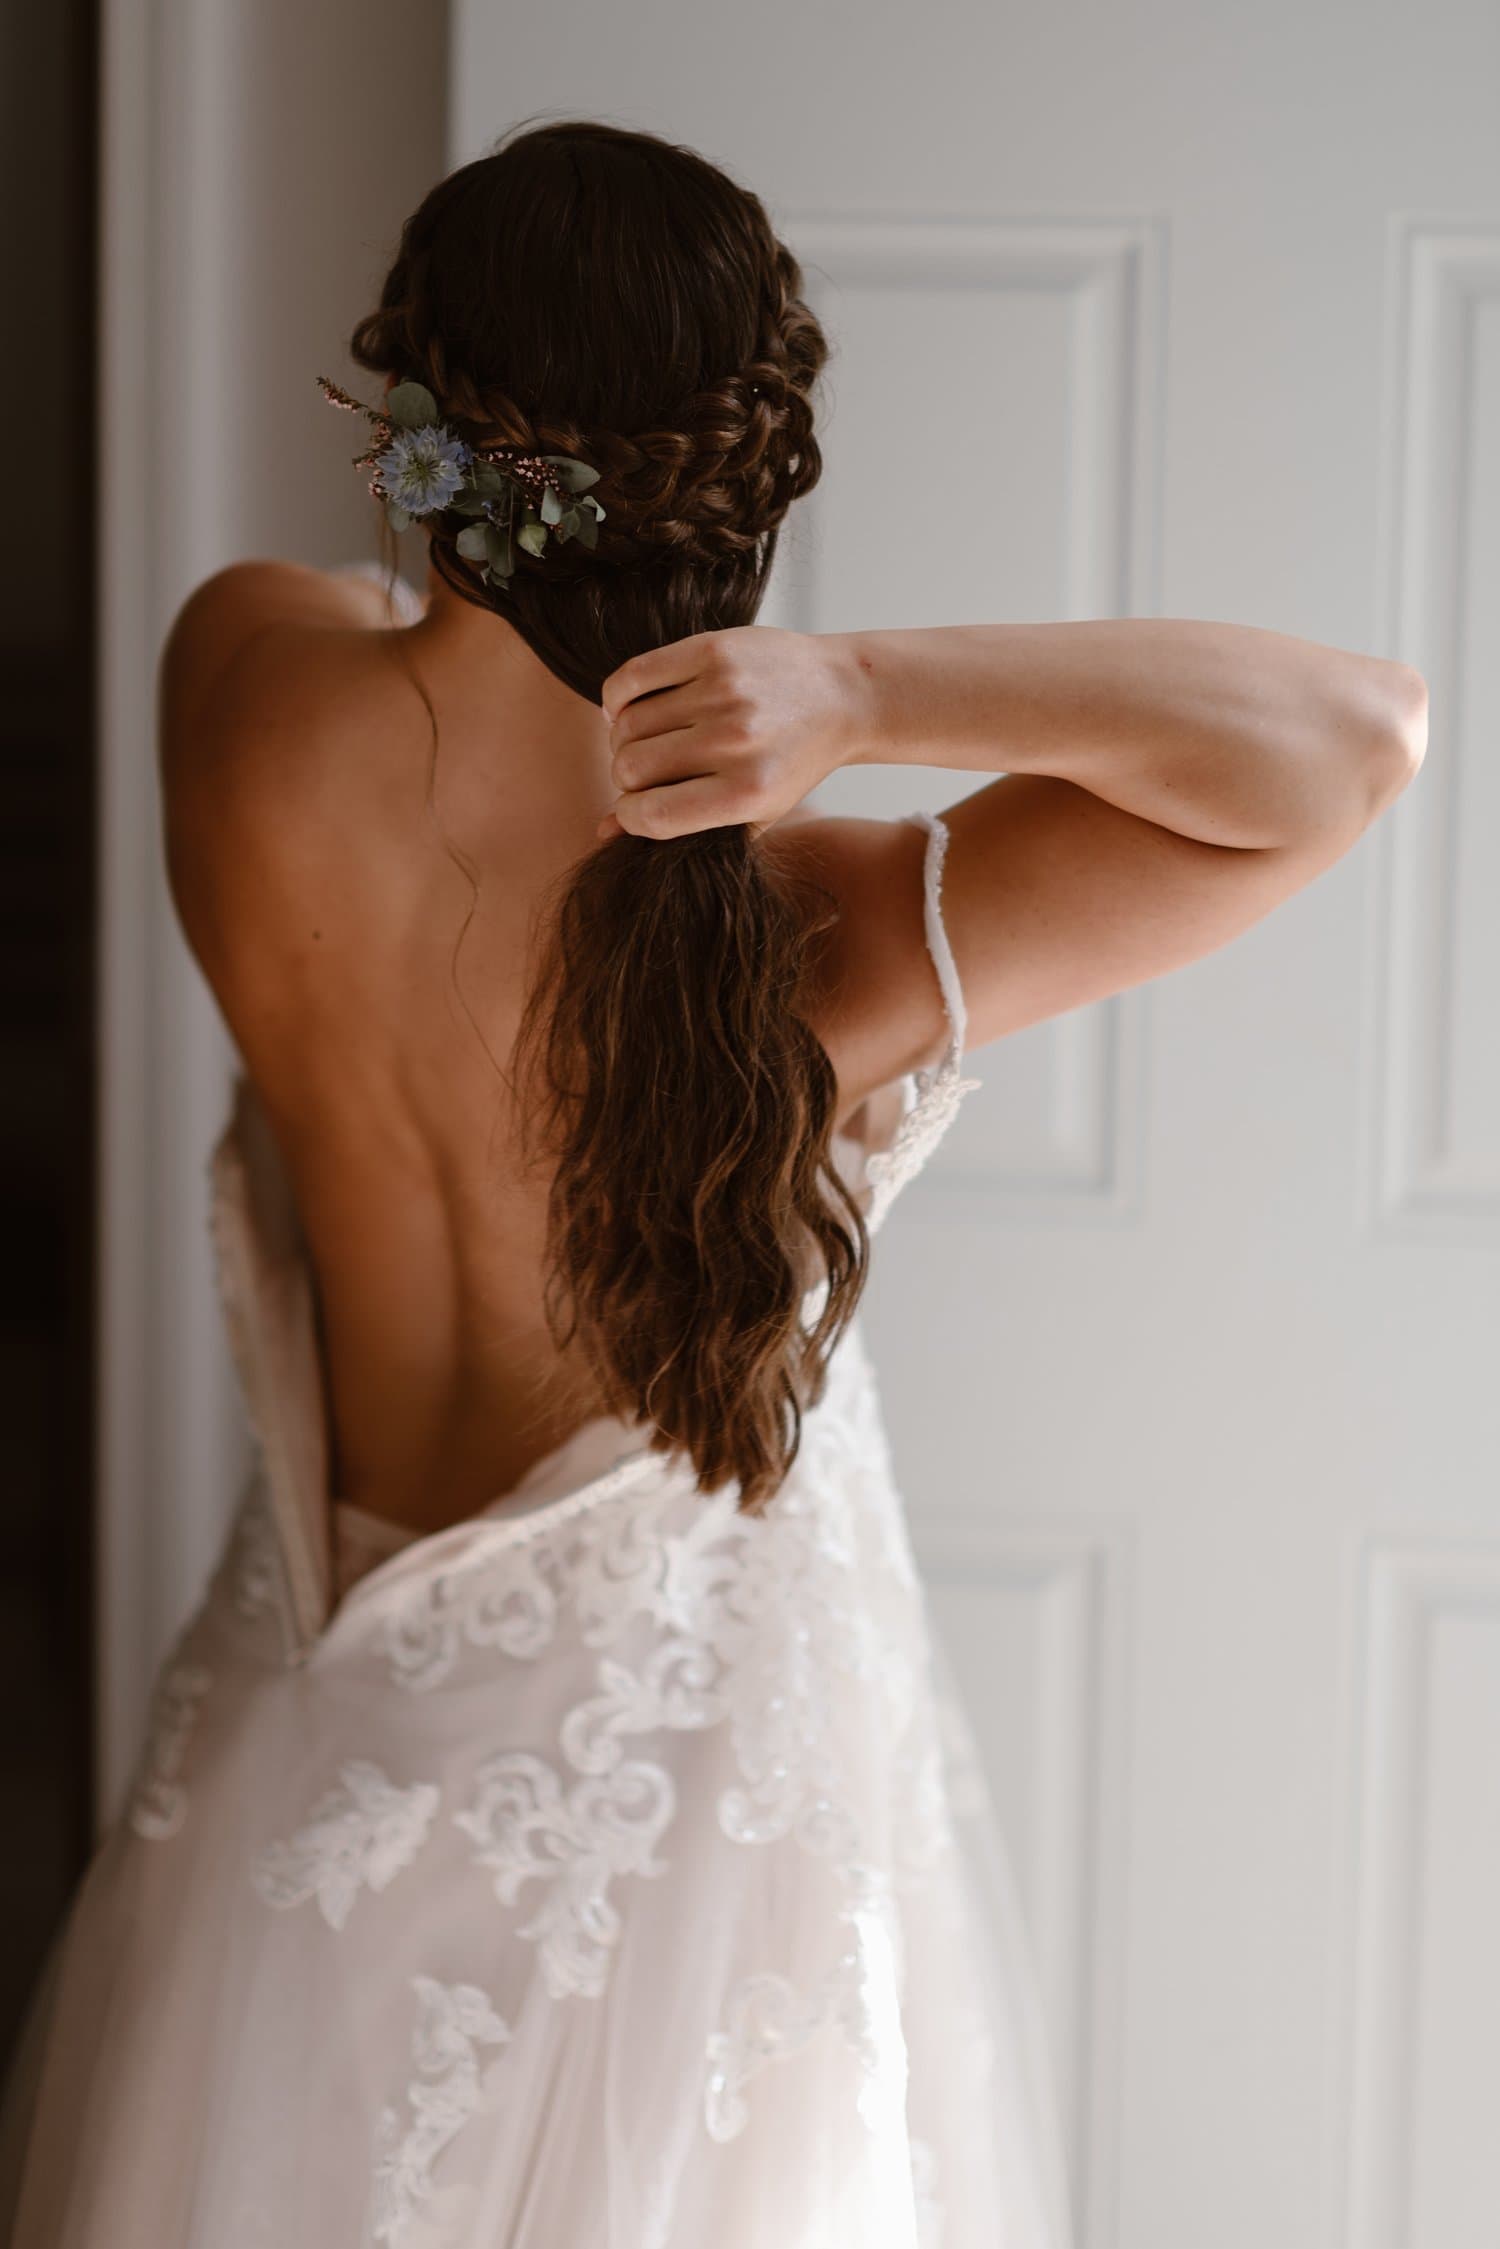 Bride puts on wedding dress in Airbnb. 